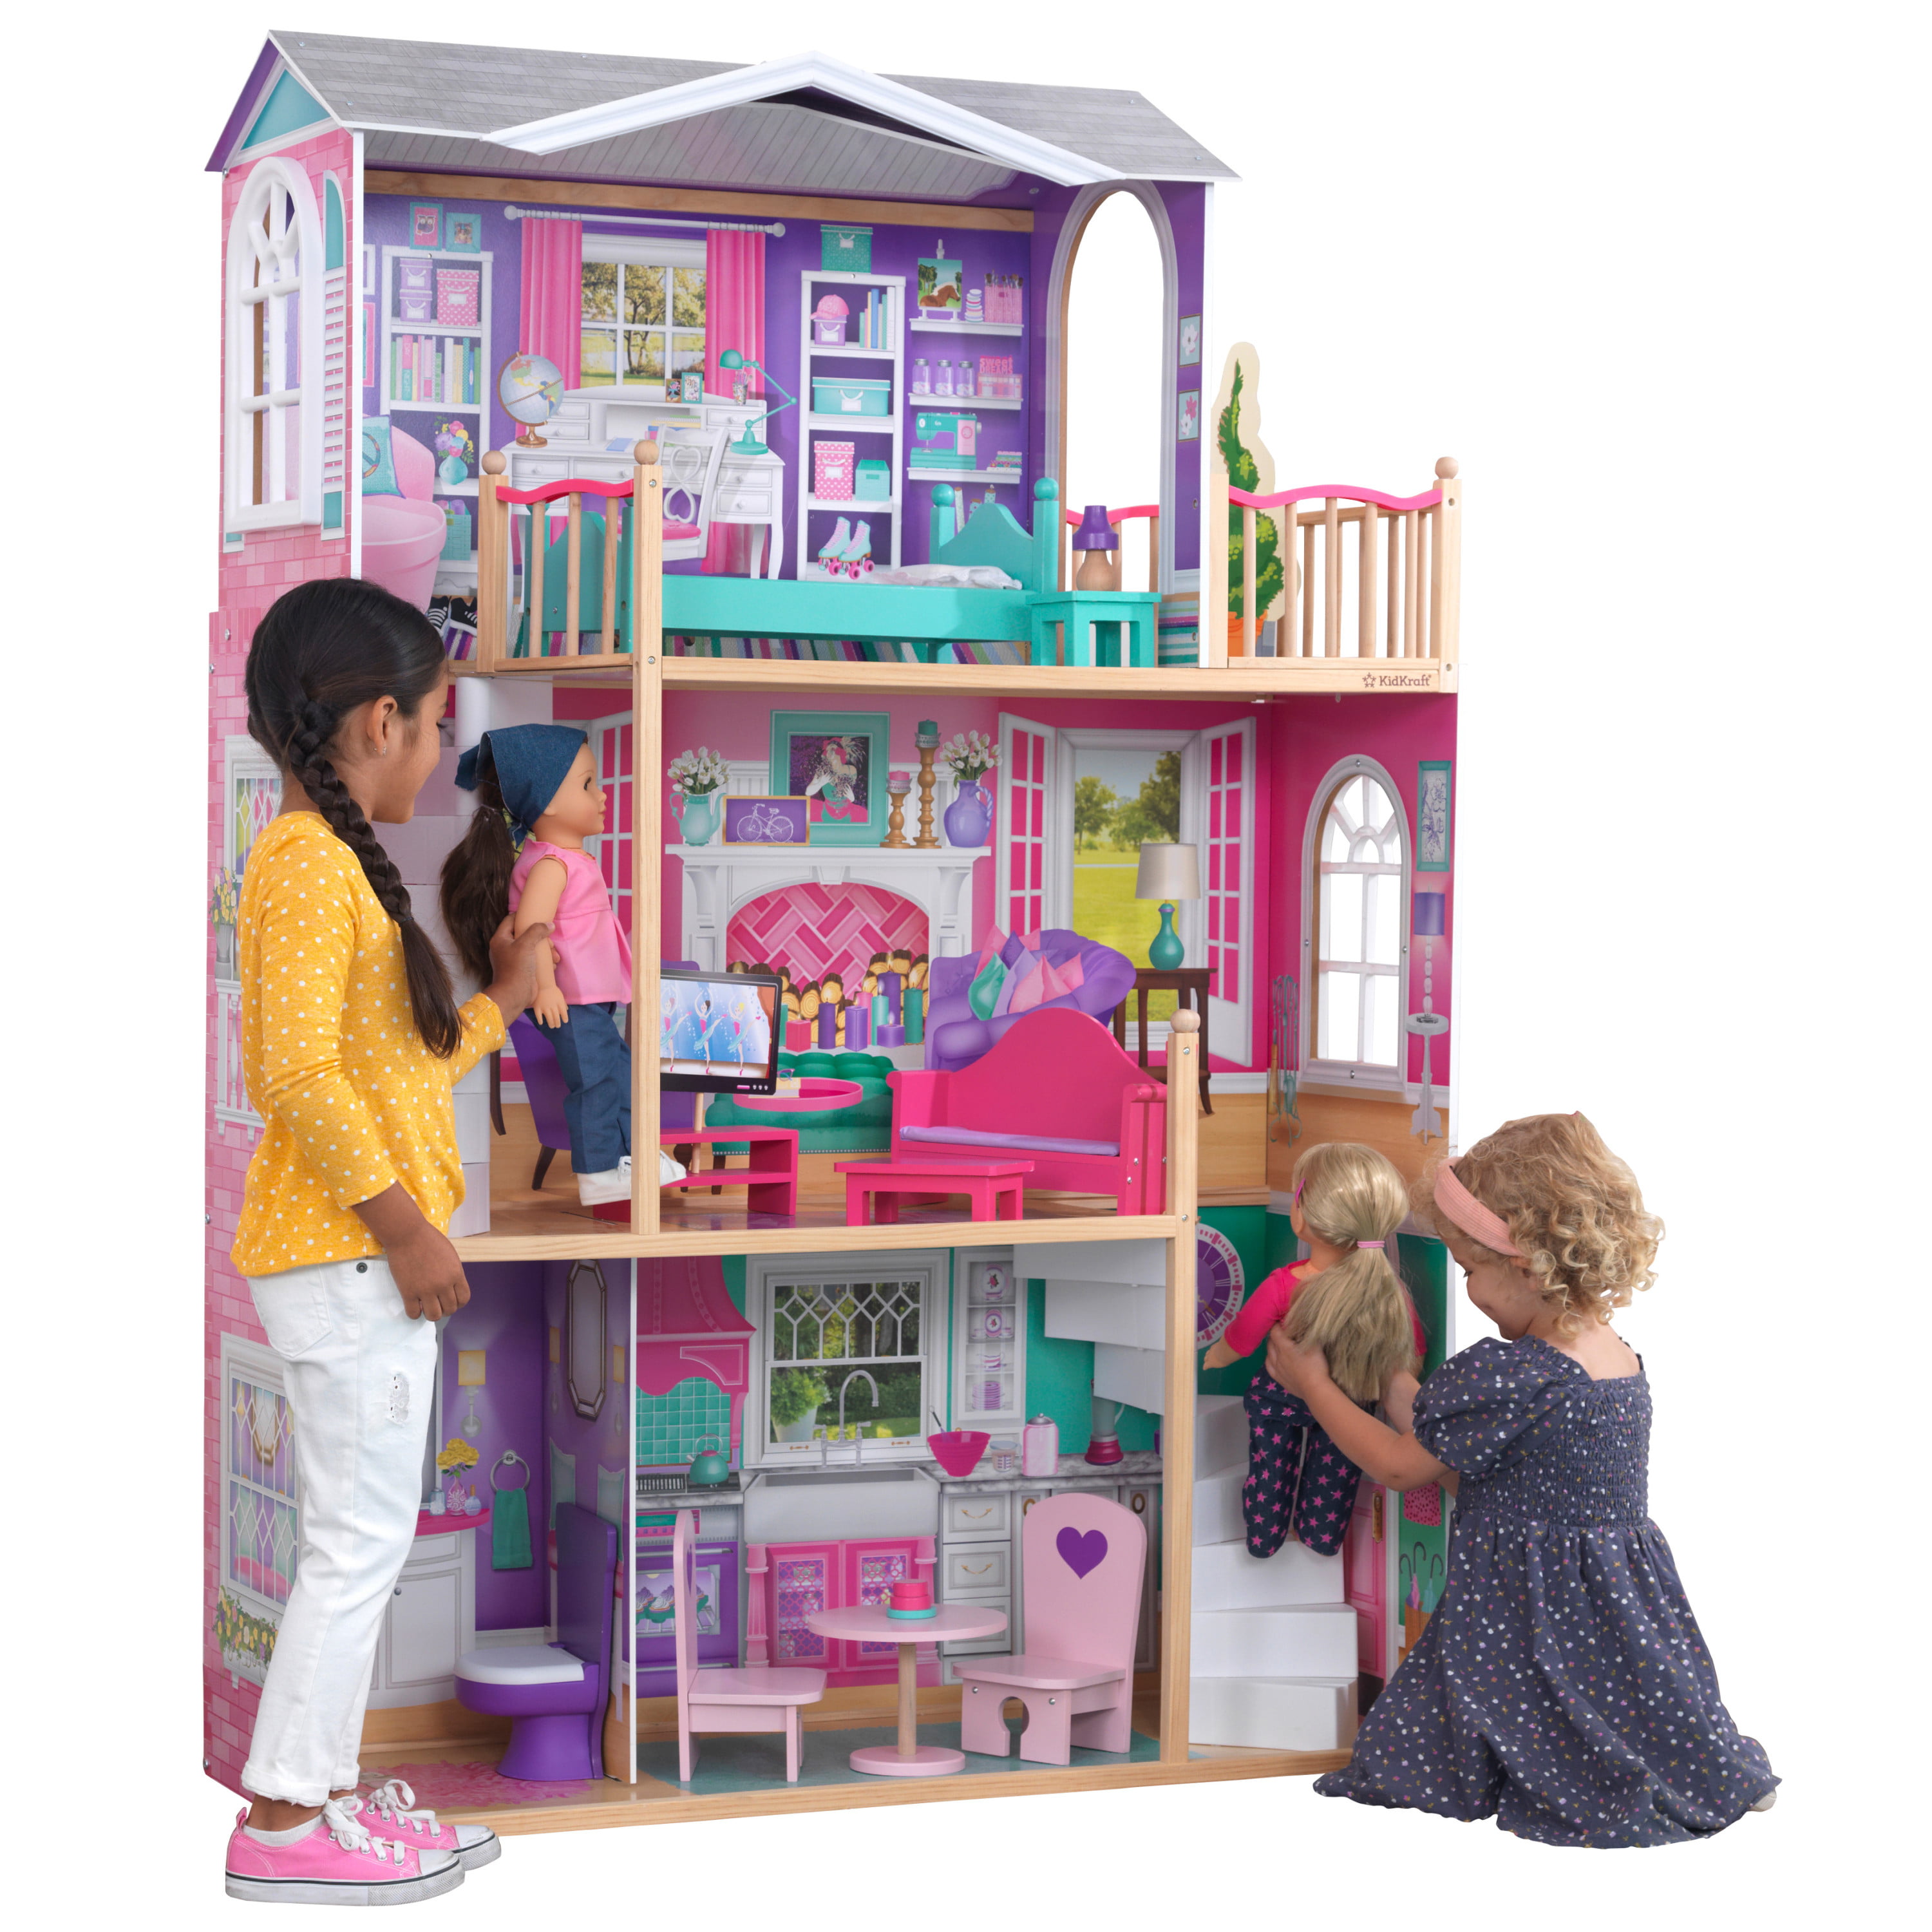 Kidkraft Dollhouse Wooden Furniture Large Lot For 4” Dolls 